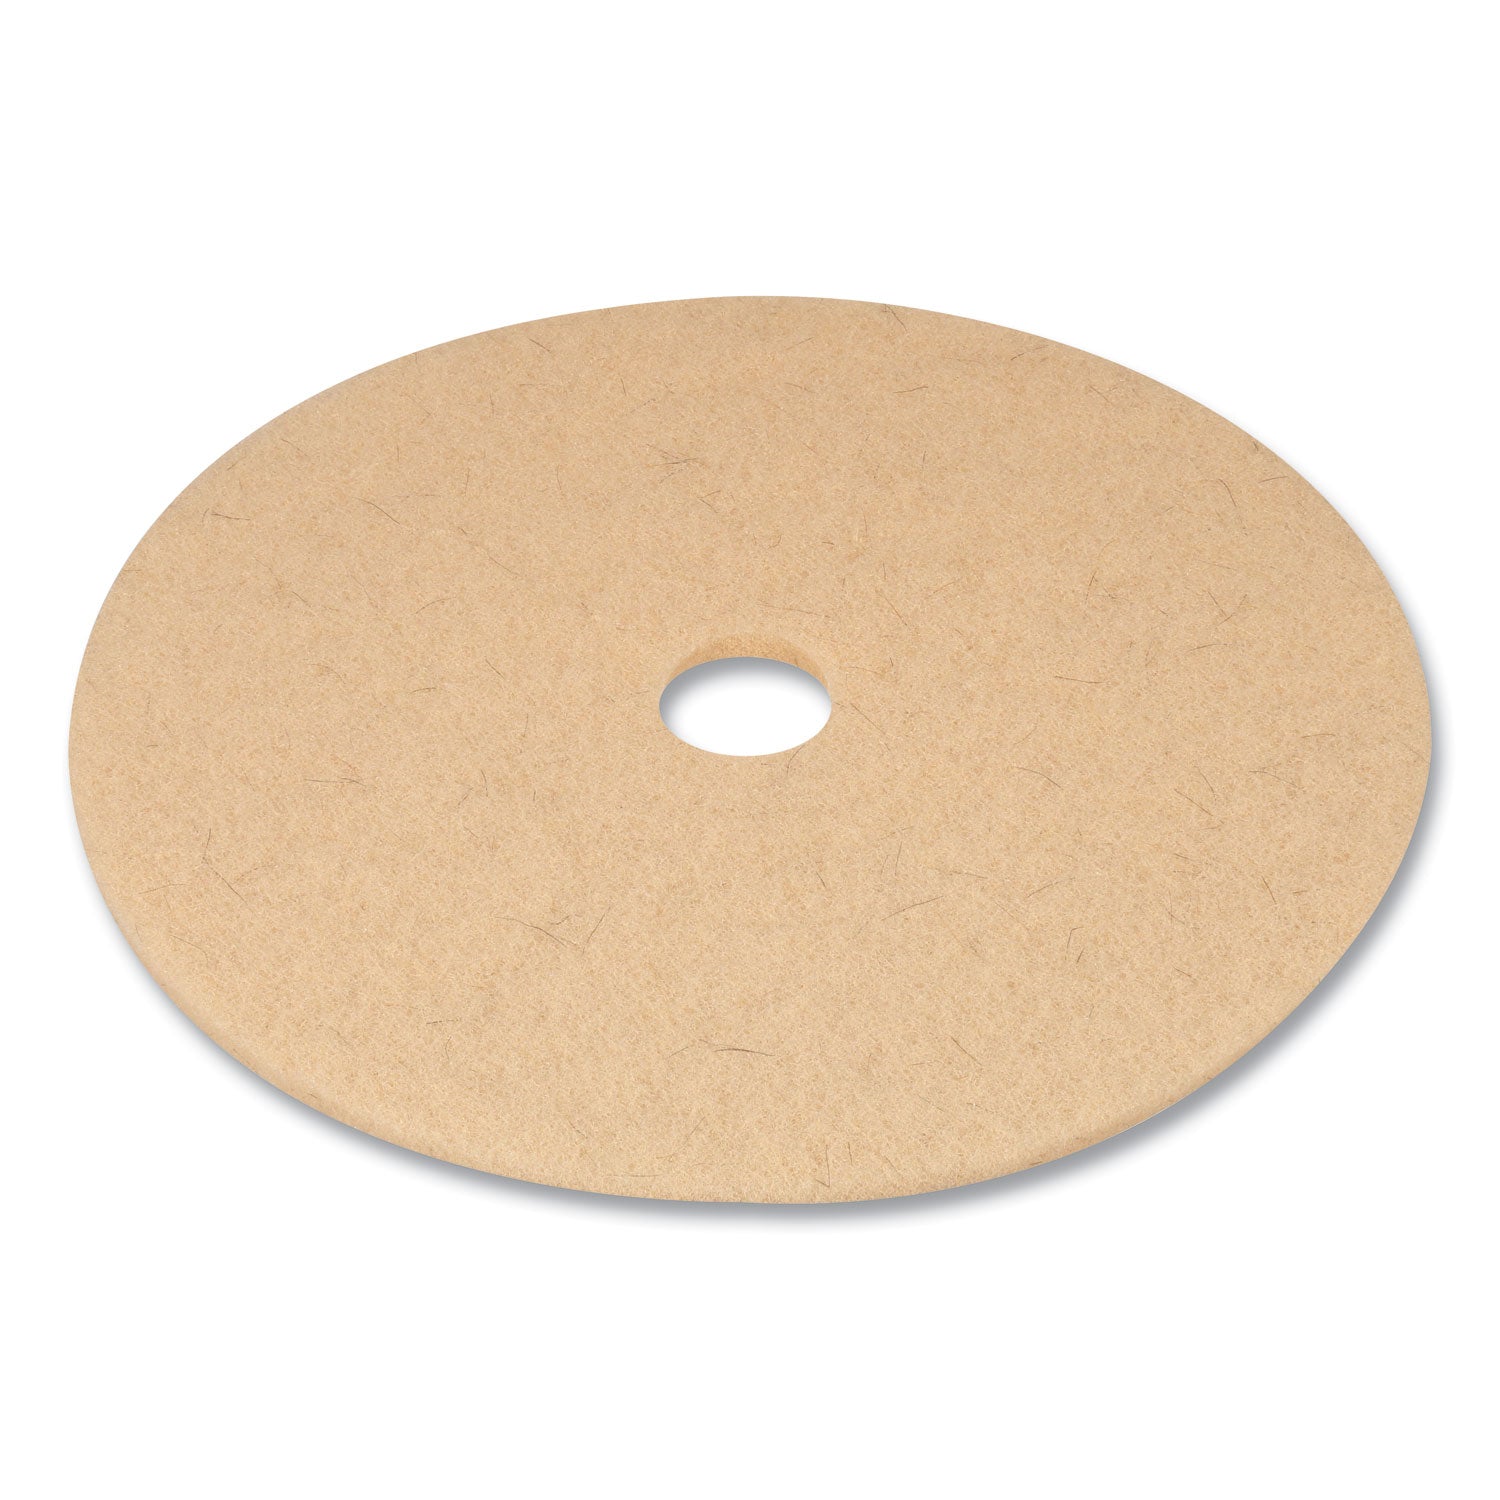 polishing-floor-pads-20-diameter-white-5-carton_cwz663605 - 3